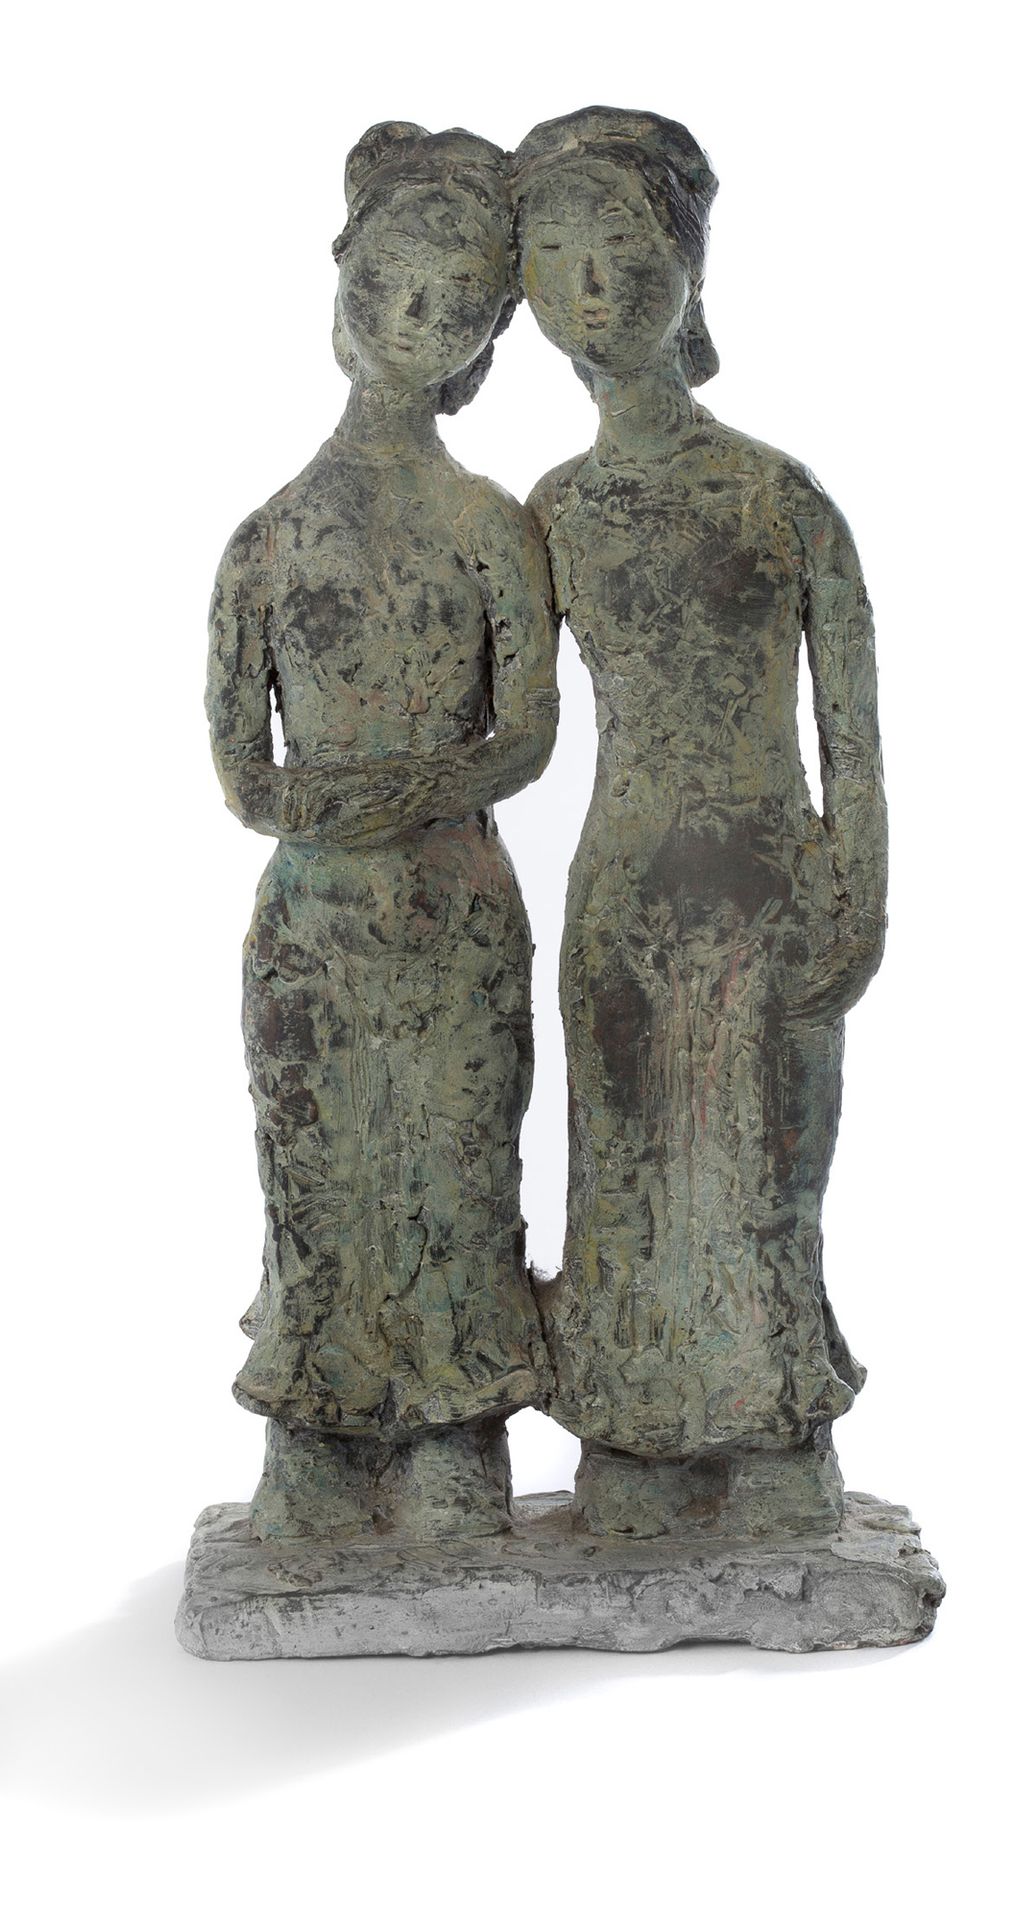 VŨ CAO ĐÀM (1908-2000) 两个年轻女人
陶器雕塑，平台上有签名
29 x 5 x 11 cm - 11 7/16 x 2 x 4 5/16 &hellip;